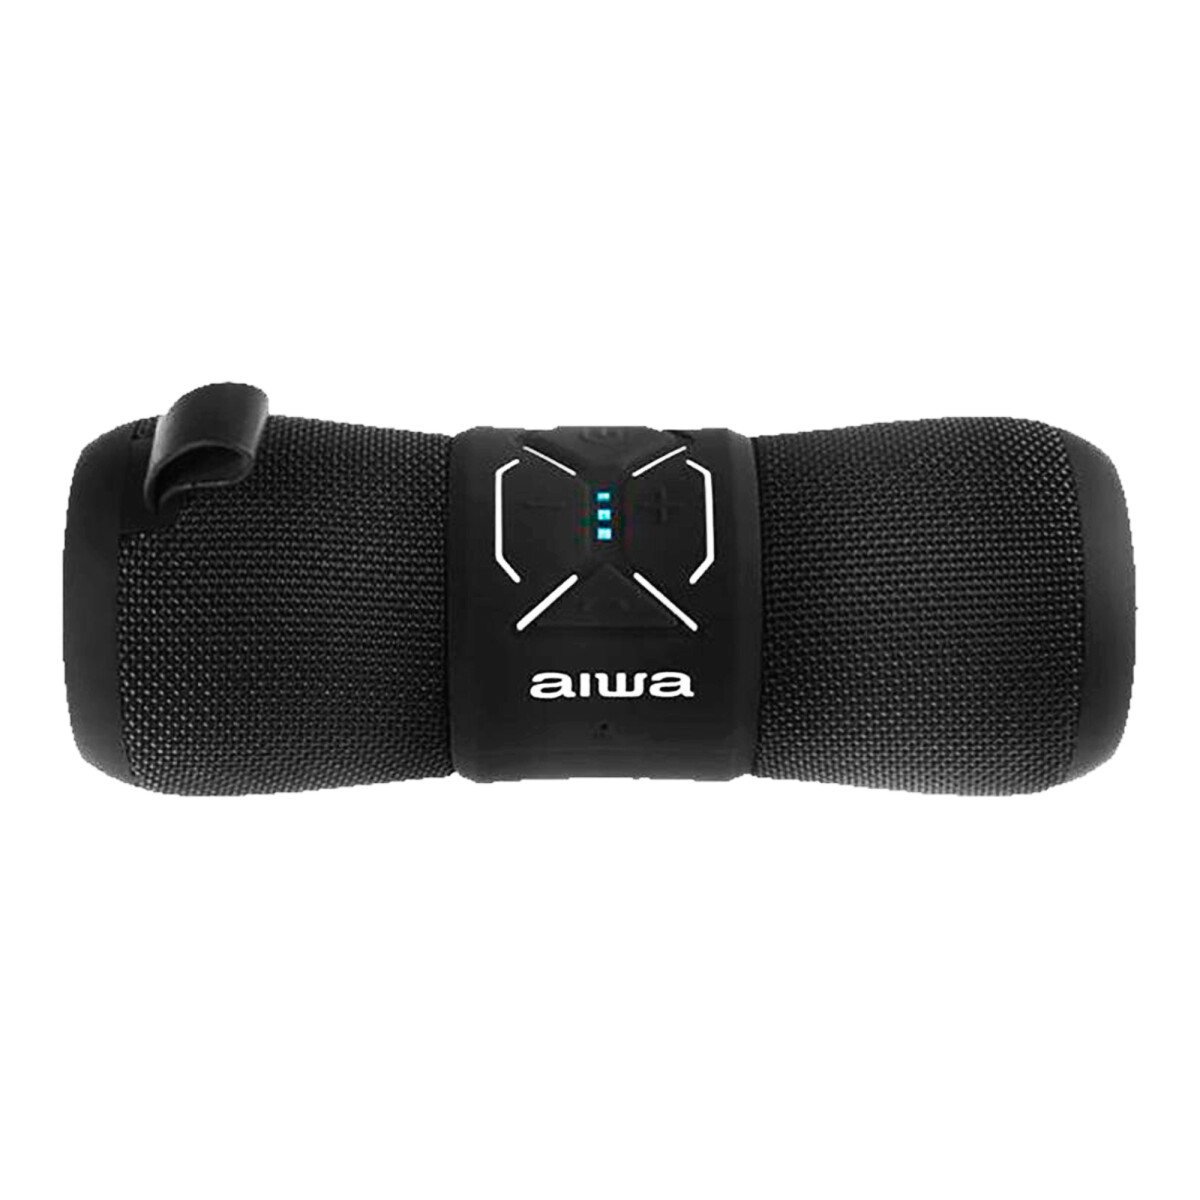 Aiwa - Parlante Portátil AW-2WPF - Bluetooth. Resistente al Agua y al Polvo. Alcance: 10 Metros. - 001 